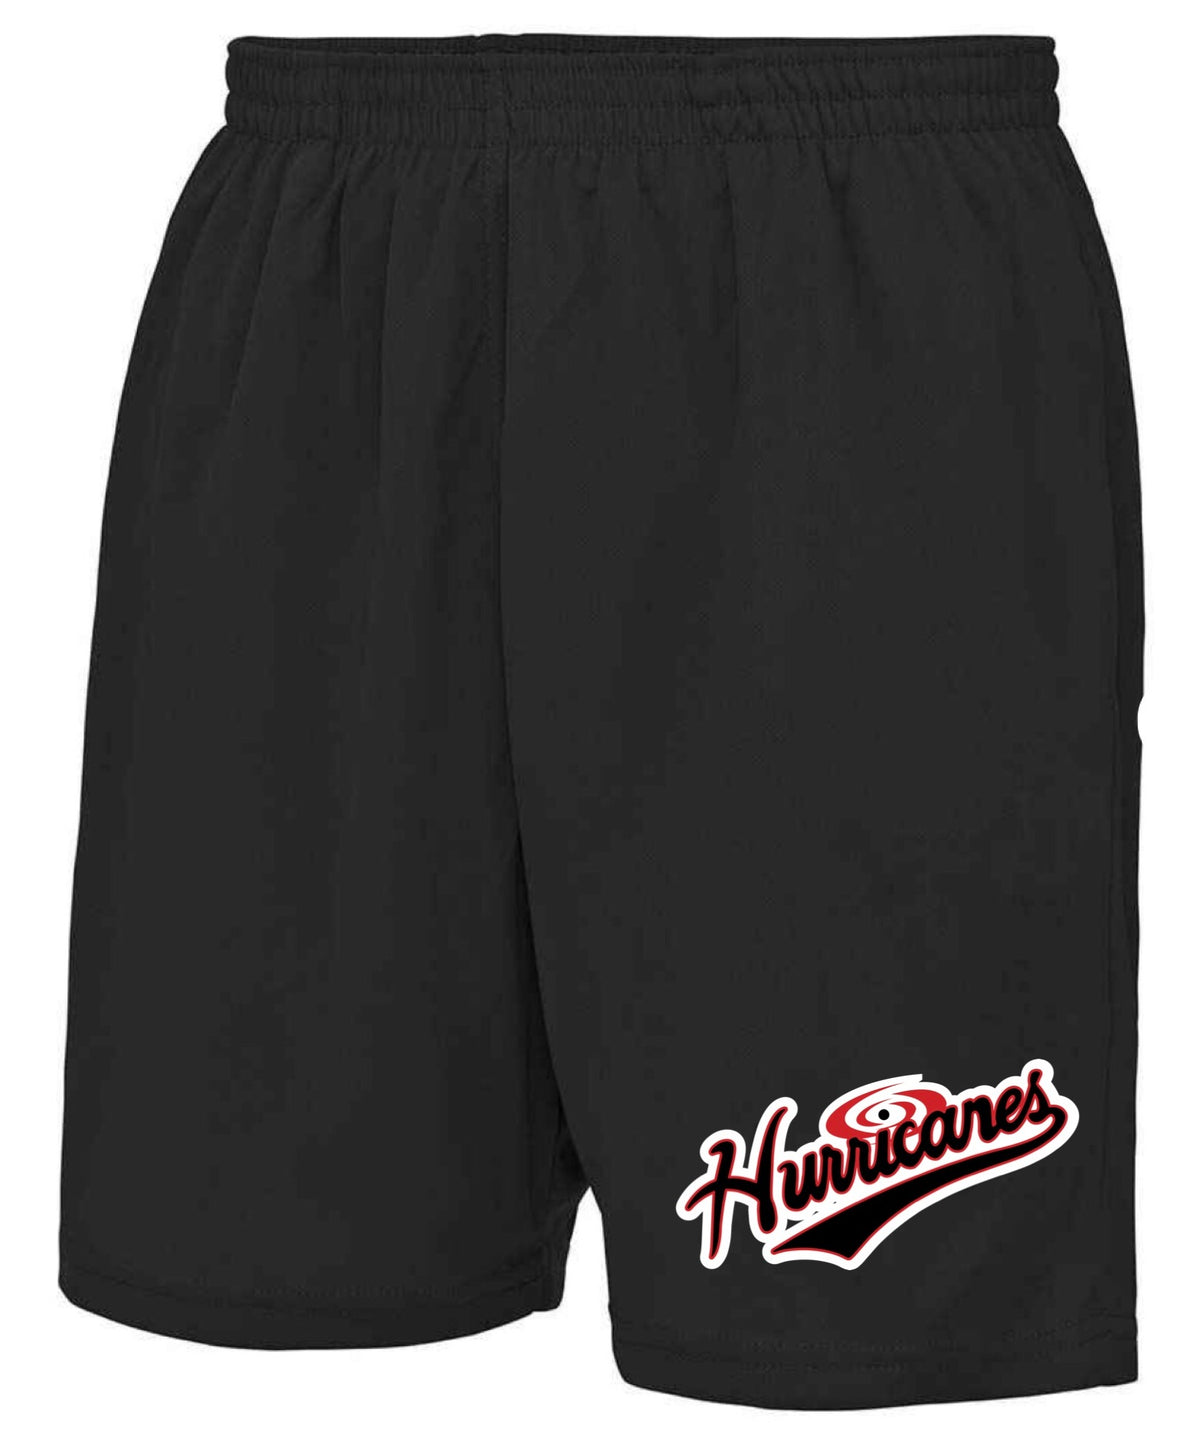 Hurricanes Shorts